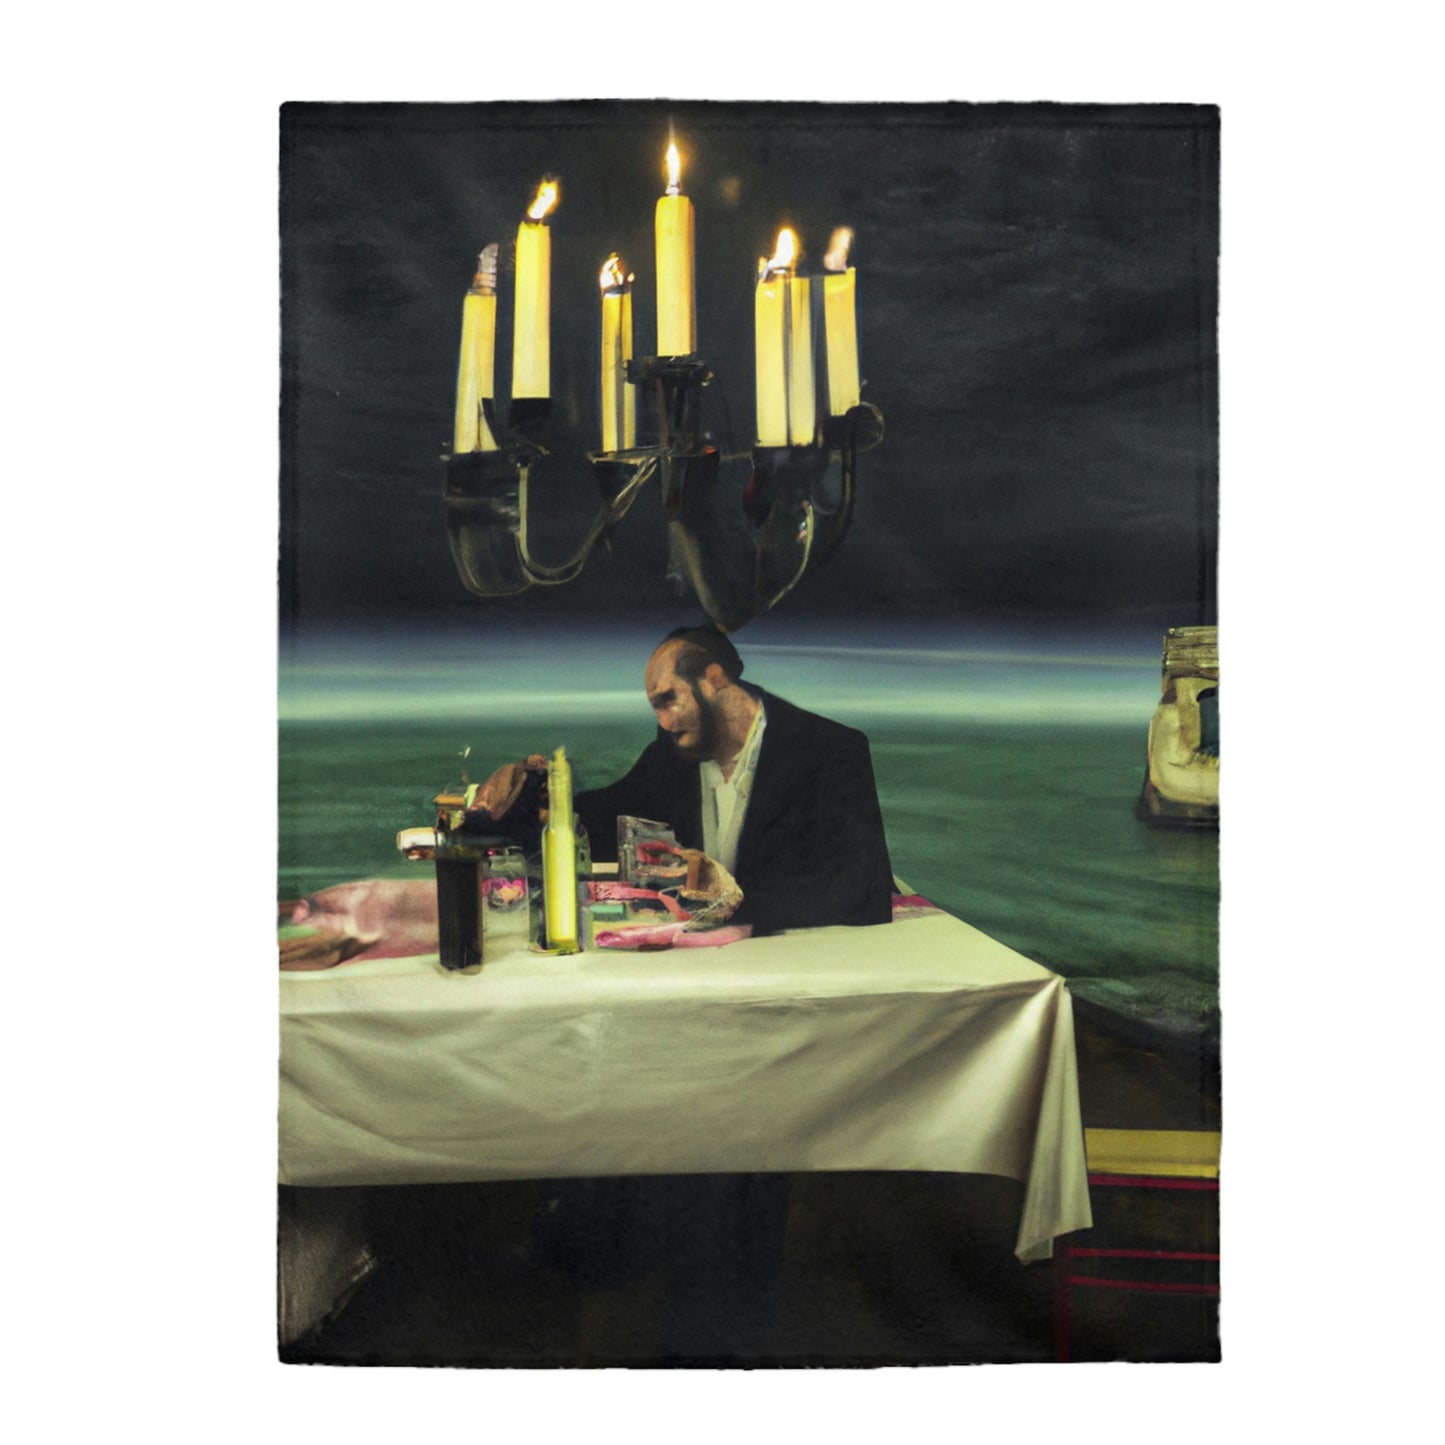 "Un faro de romance: una cena íntima a la luz de las velas en un faro olvidado" - La manta de felpa Alien Velveteen